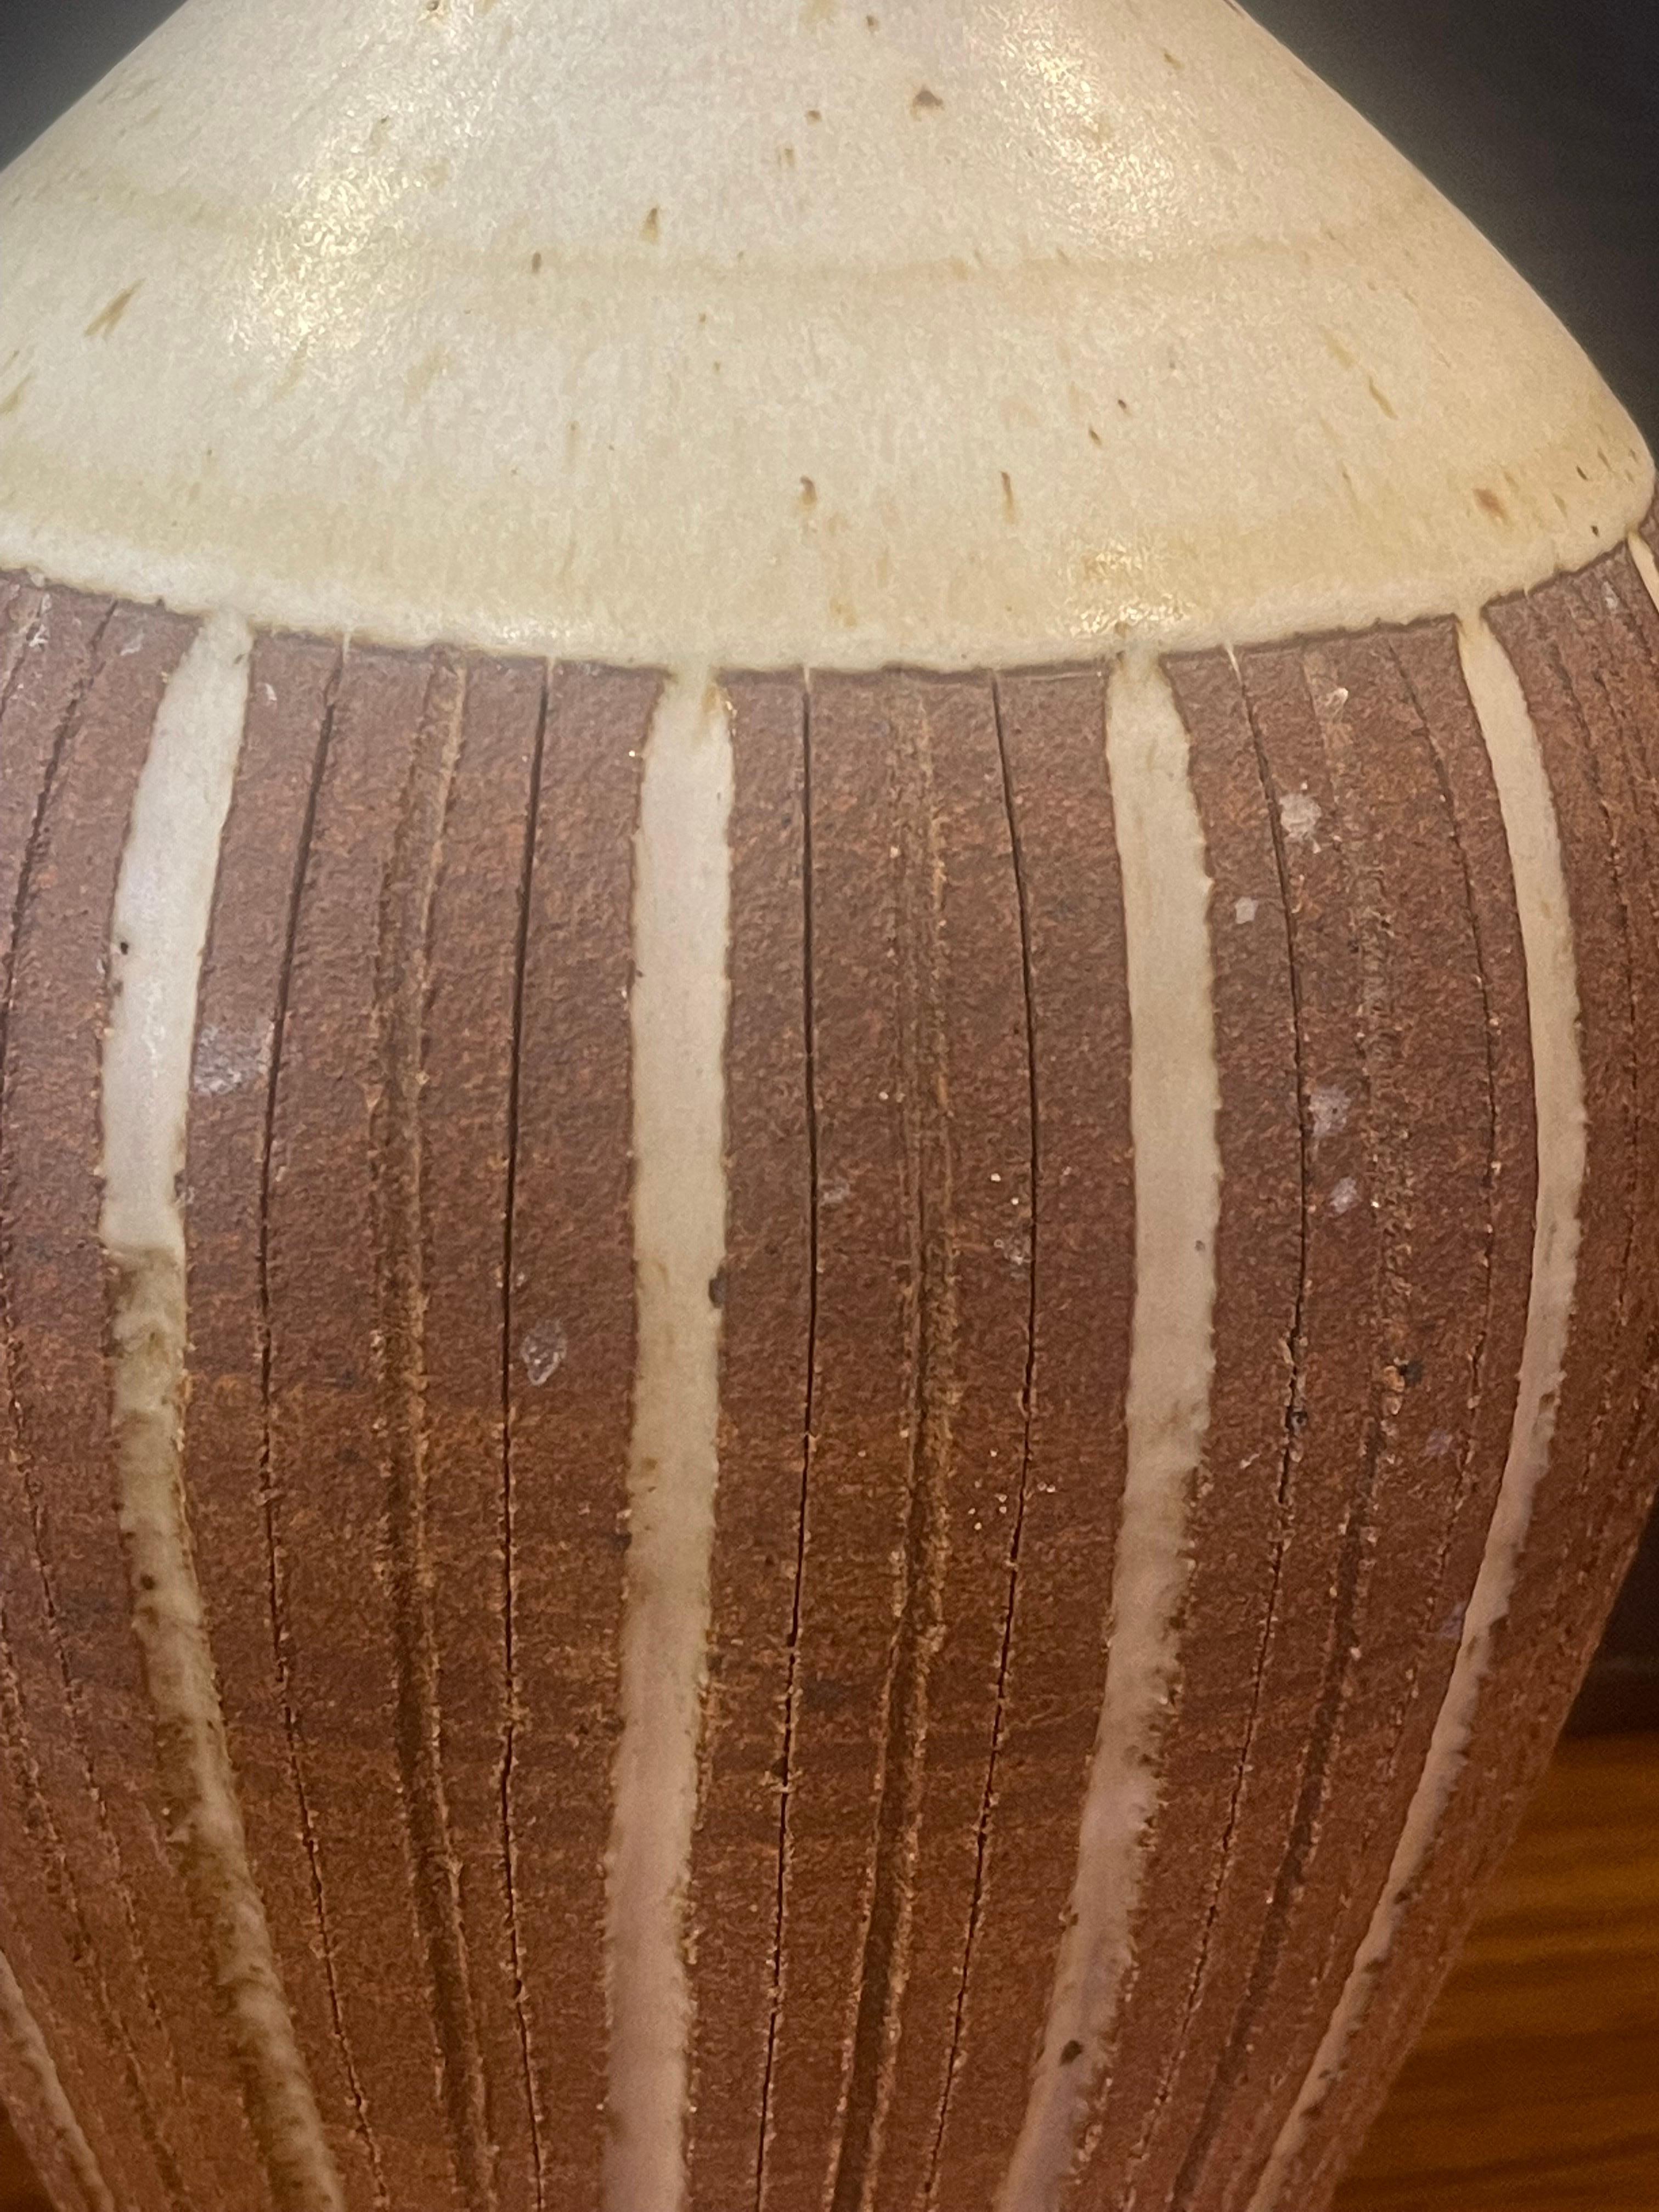 American California Studio Pottery Stoneware Vase by Barbara Moorefield For Sale